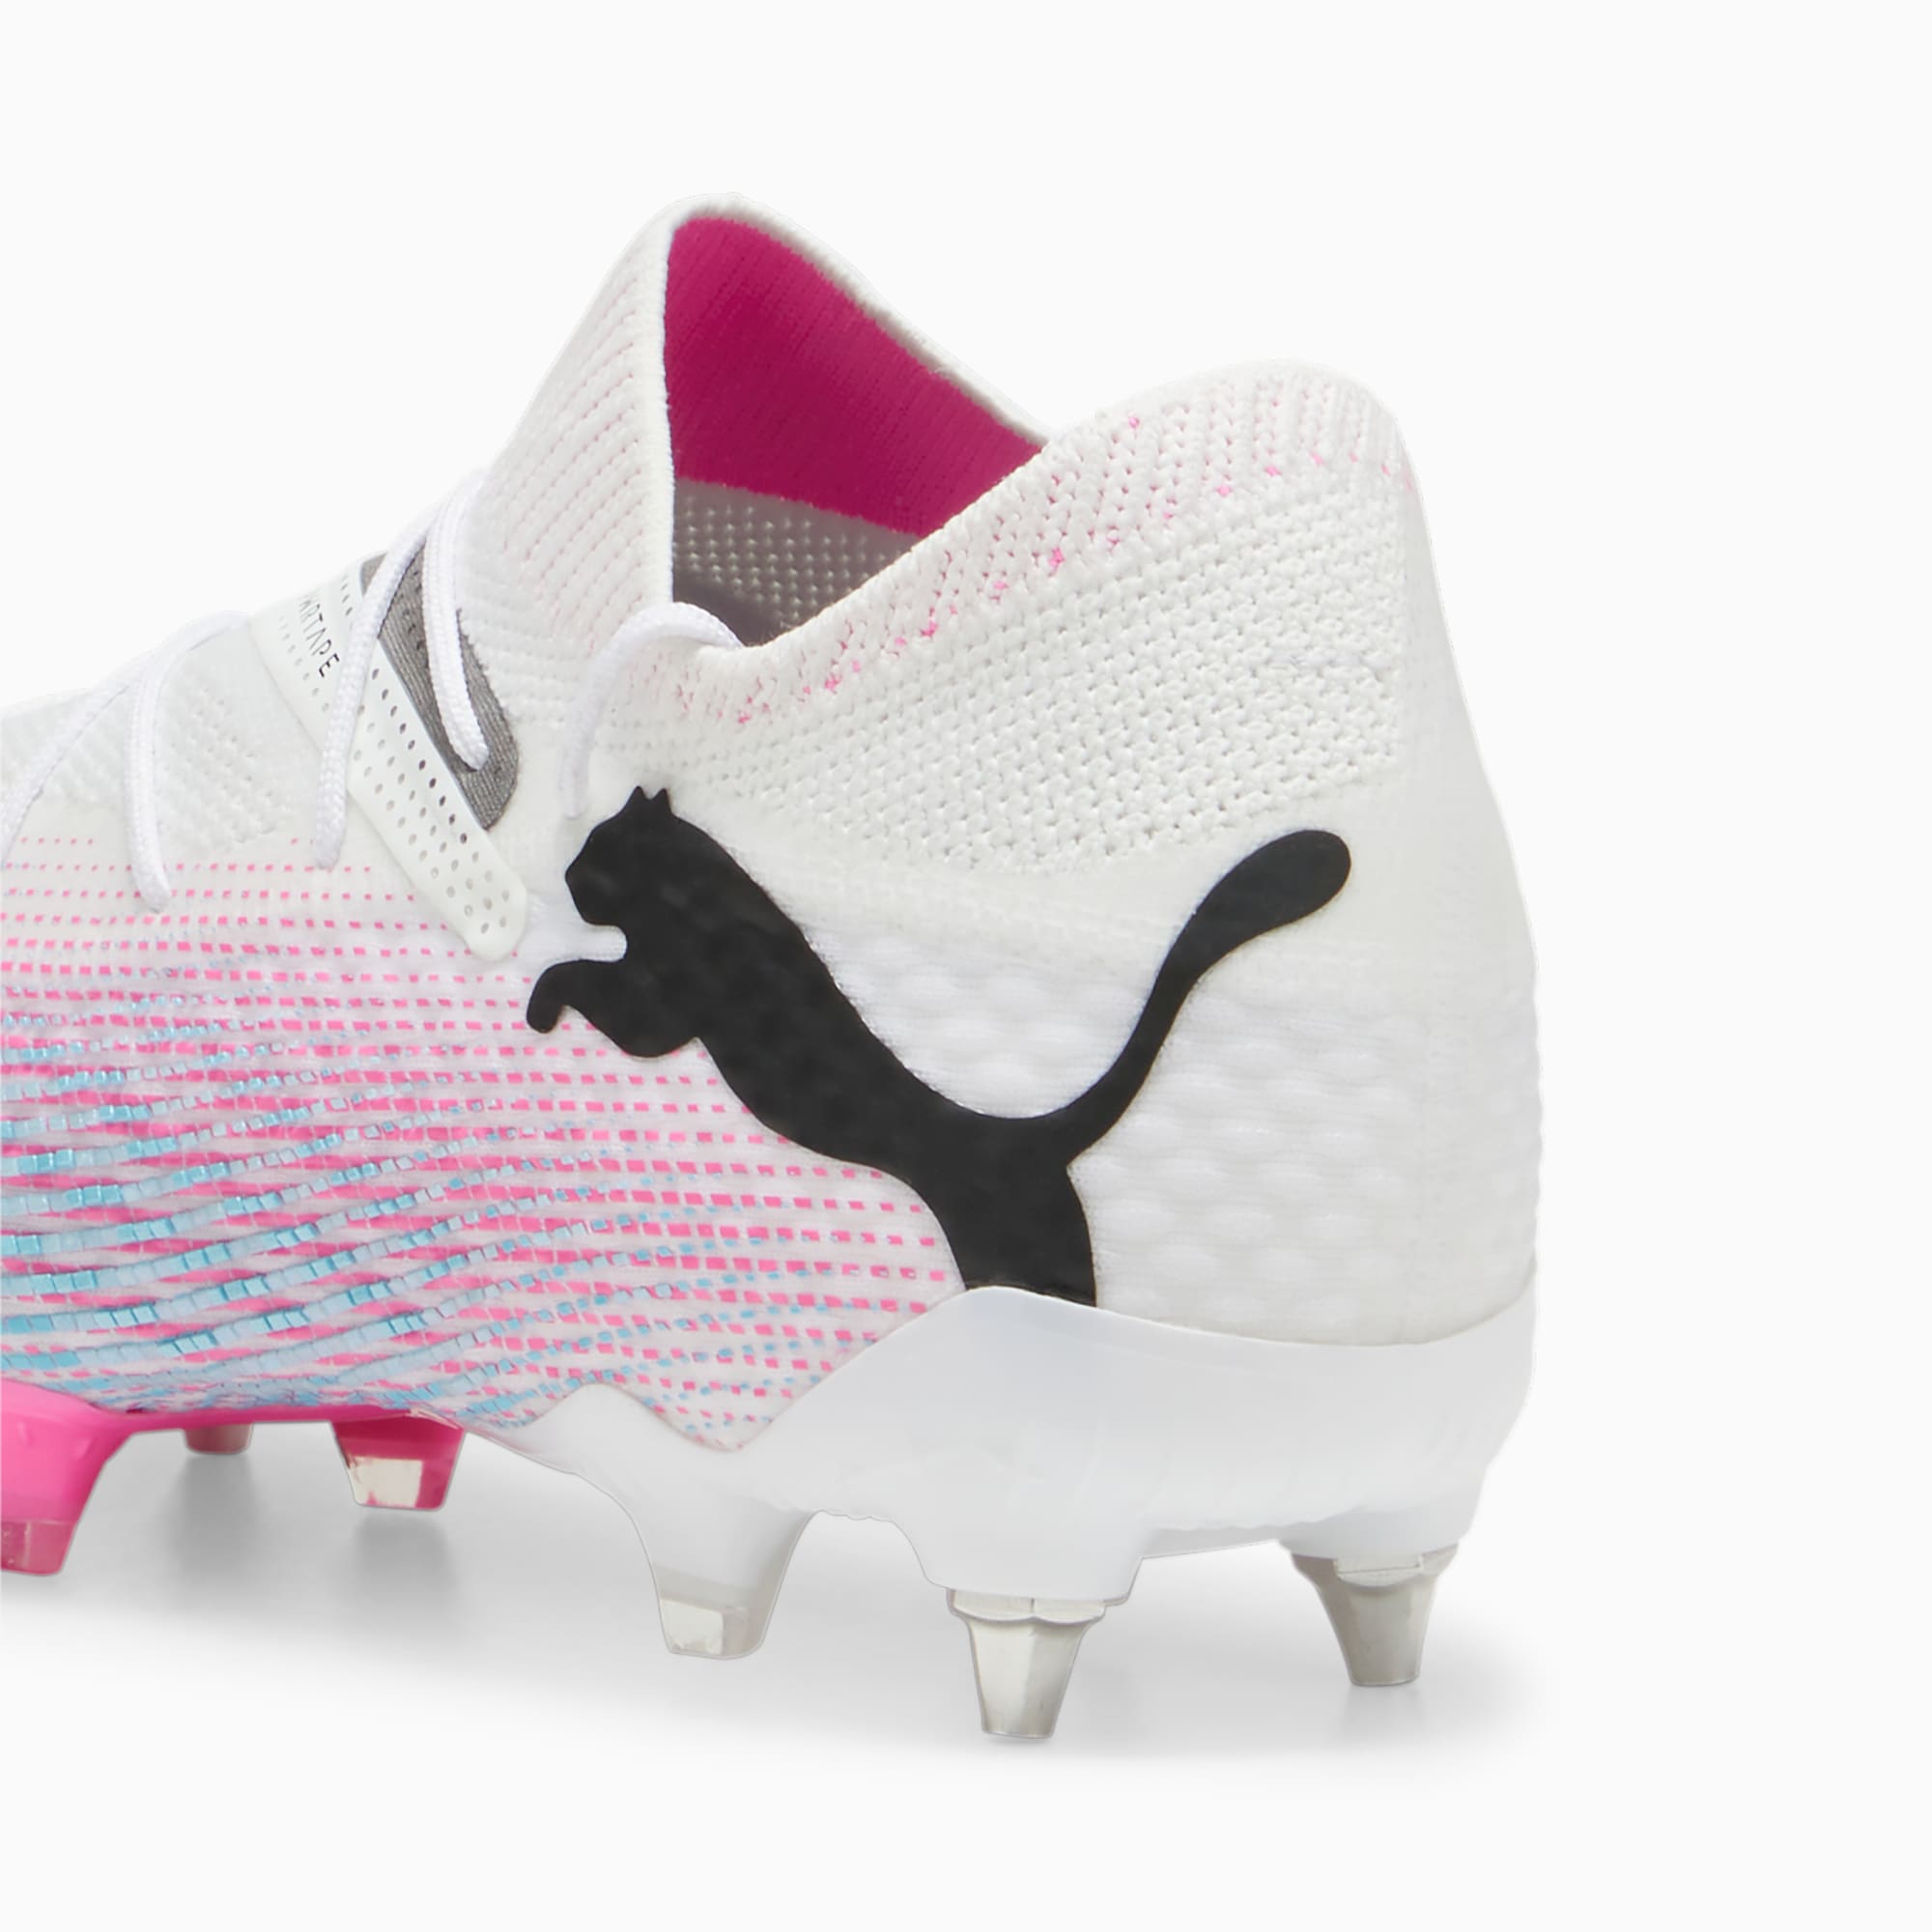 PUMA FUTURE Soccer Cleats & Soccer Shoes